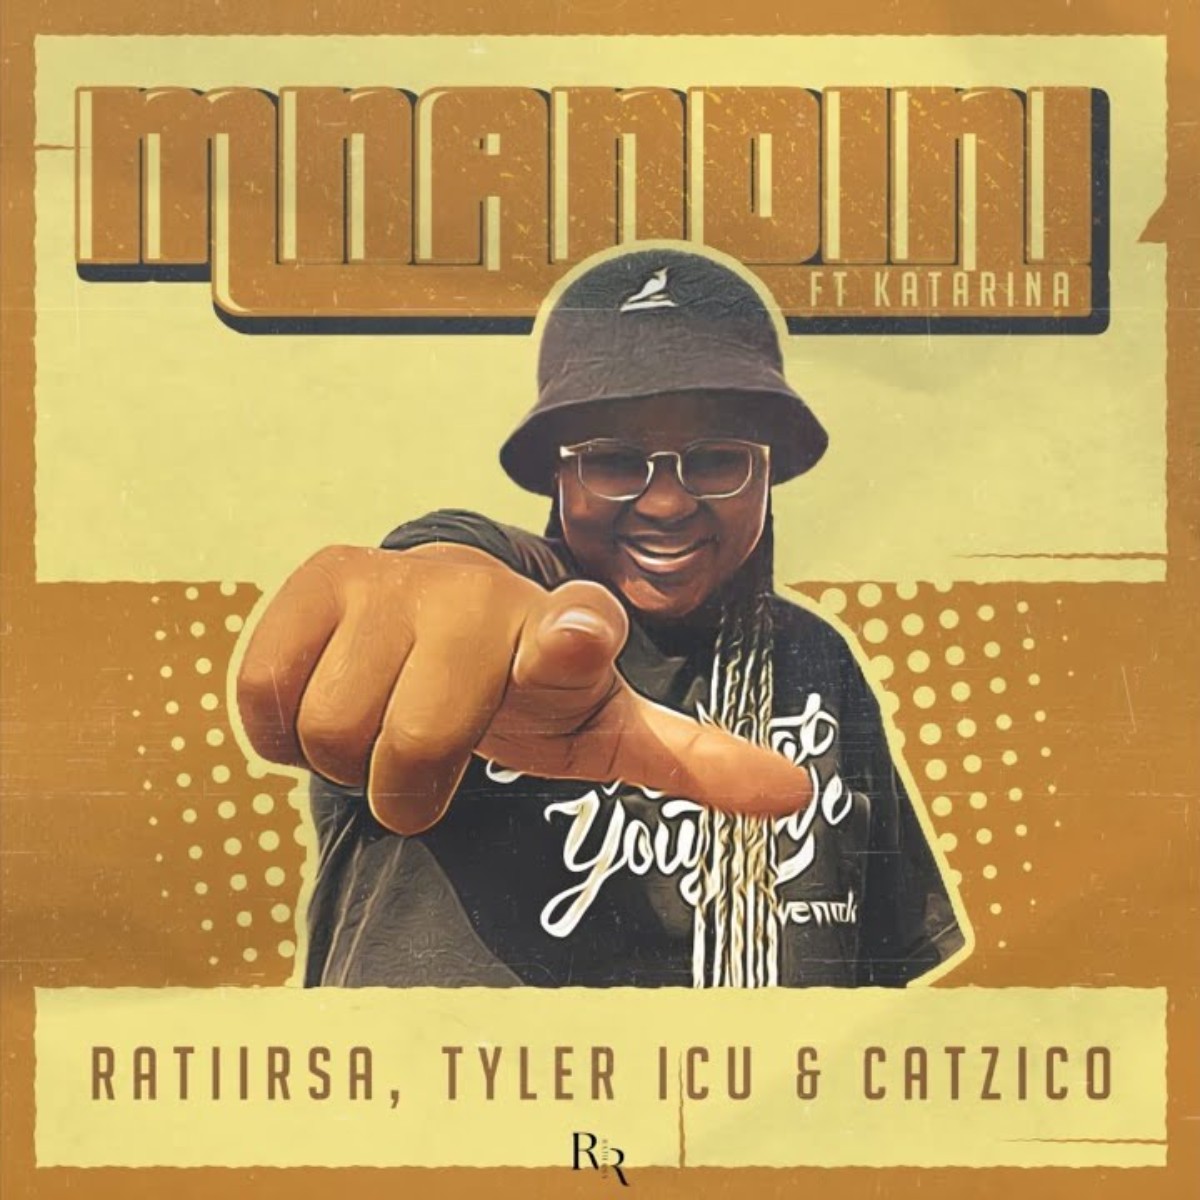 Ratii Rsa, Tyler ICU & Catzico – Mnandini ft. Katarina mp3 download free lyrics